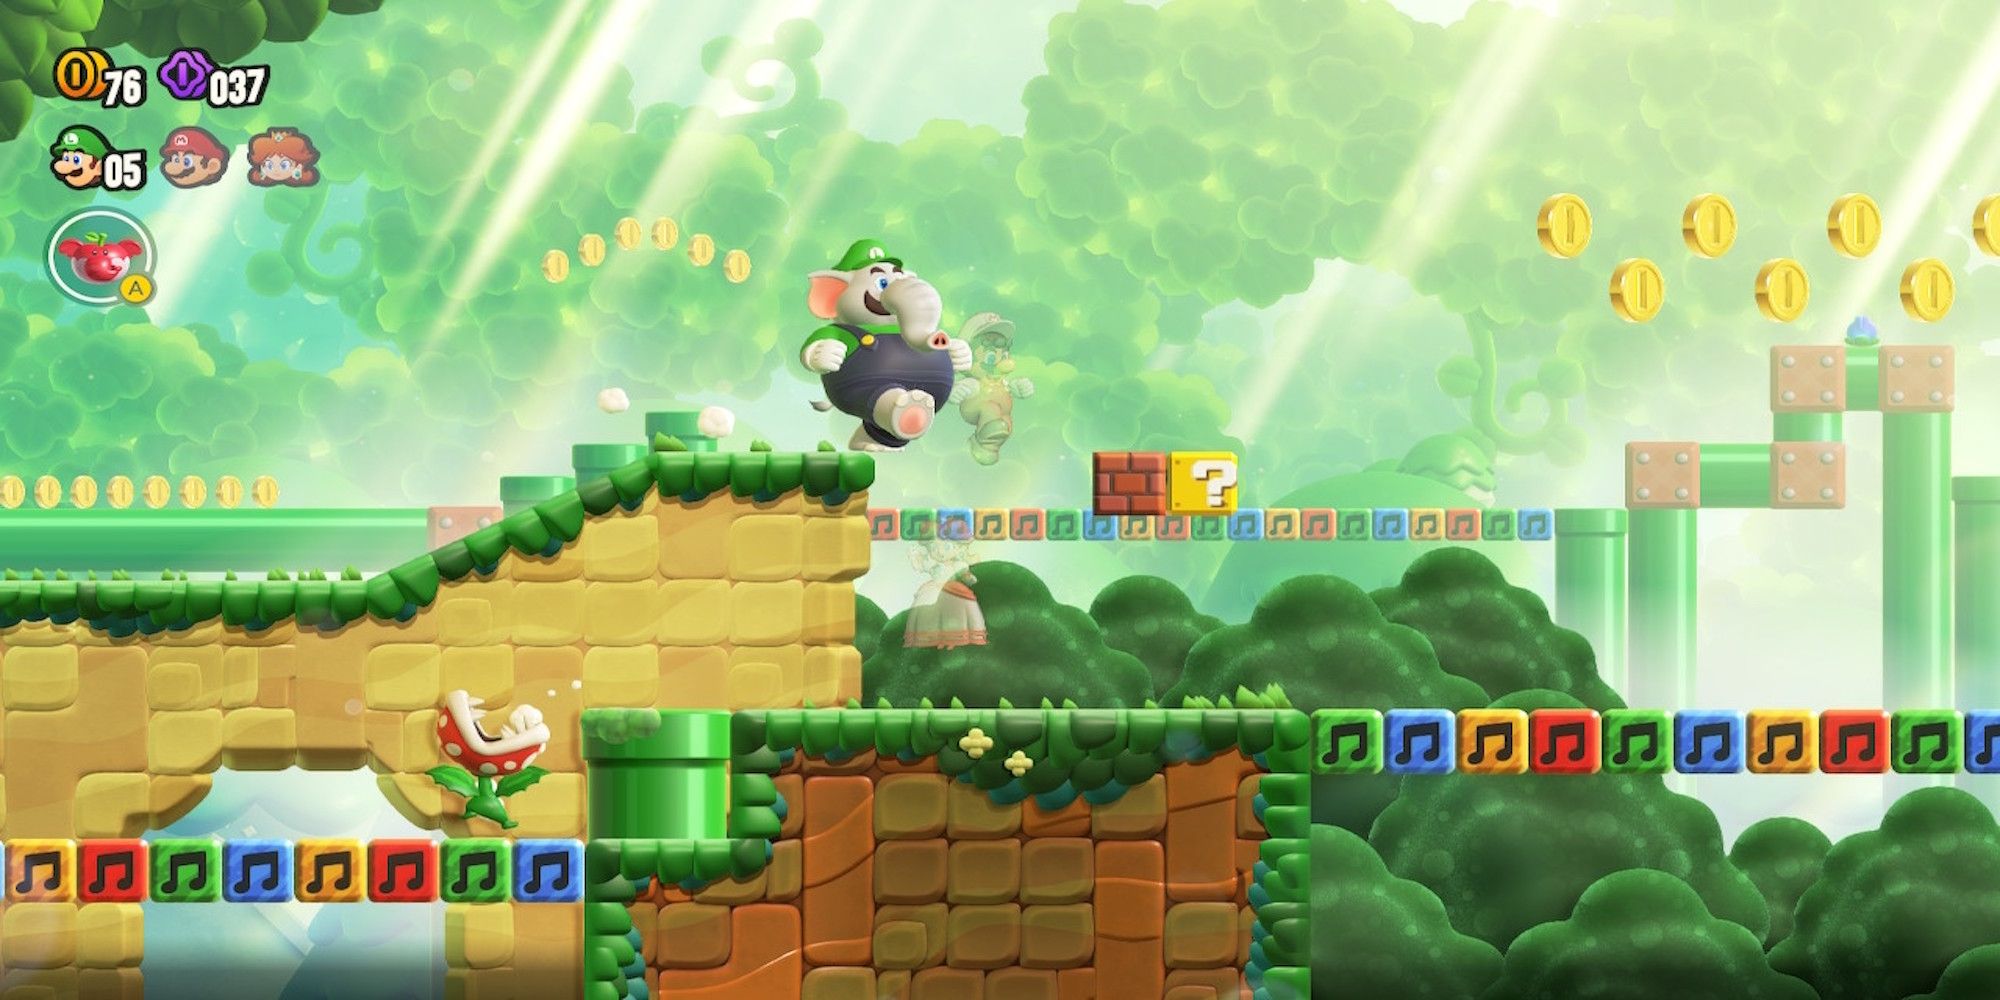 Elephant Luigi playing a level in Super Mario Bros. Wonder